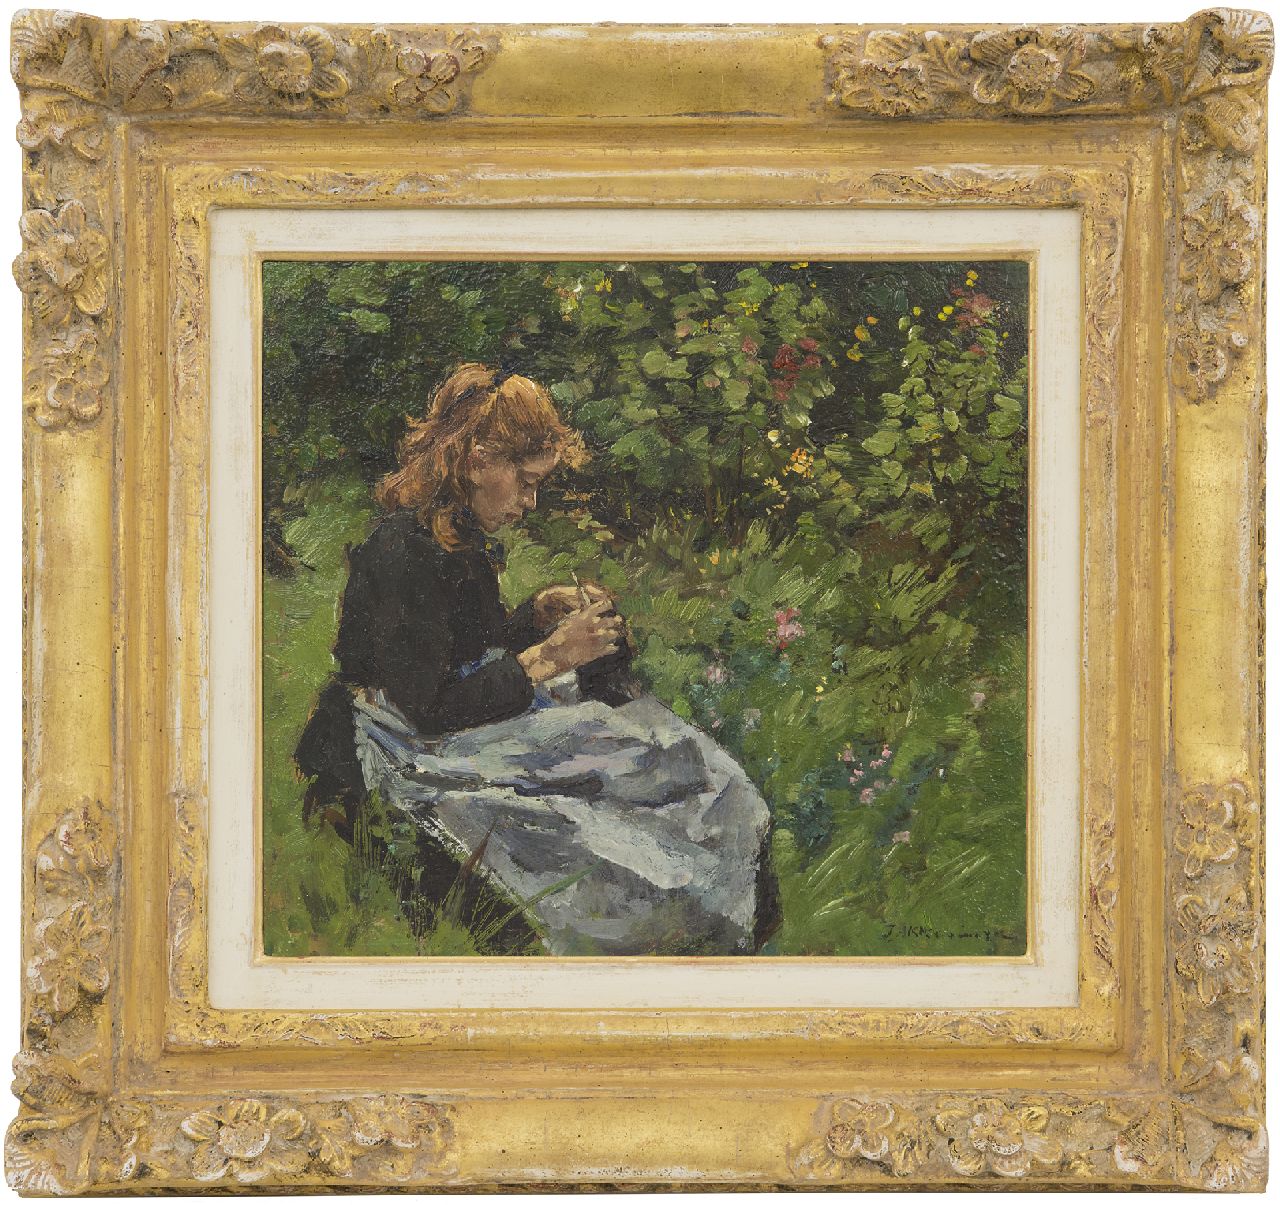 Akkeringa J.E.H.  | 'Johannes Evert' Hendrik Akkeringa, Afternoon in the garden, oil on panel 23.6 x 25.7 cm, signed l.r.